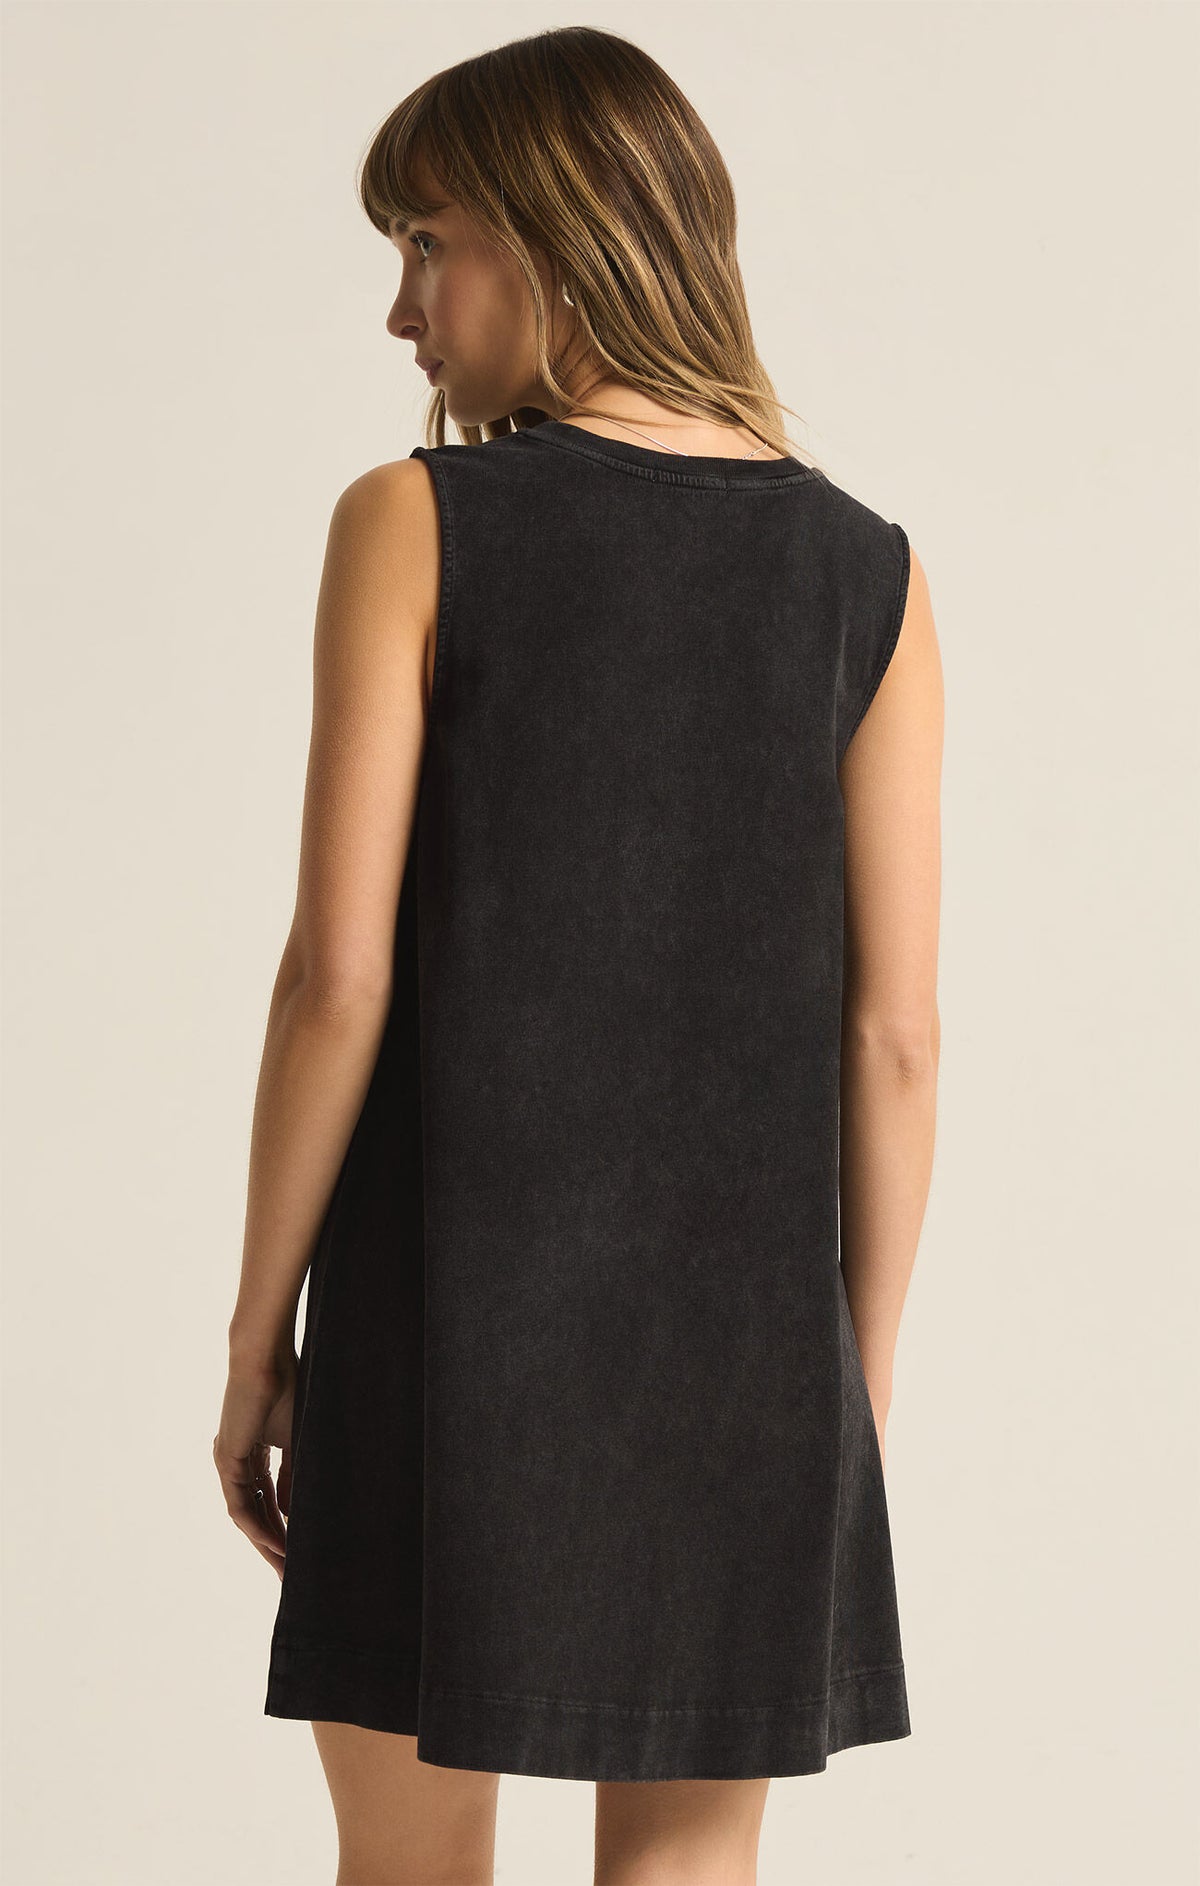 Sloane Dress in Black